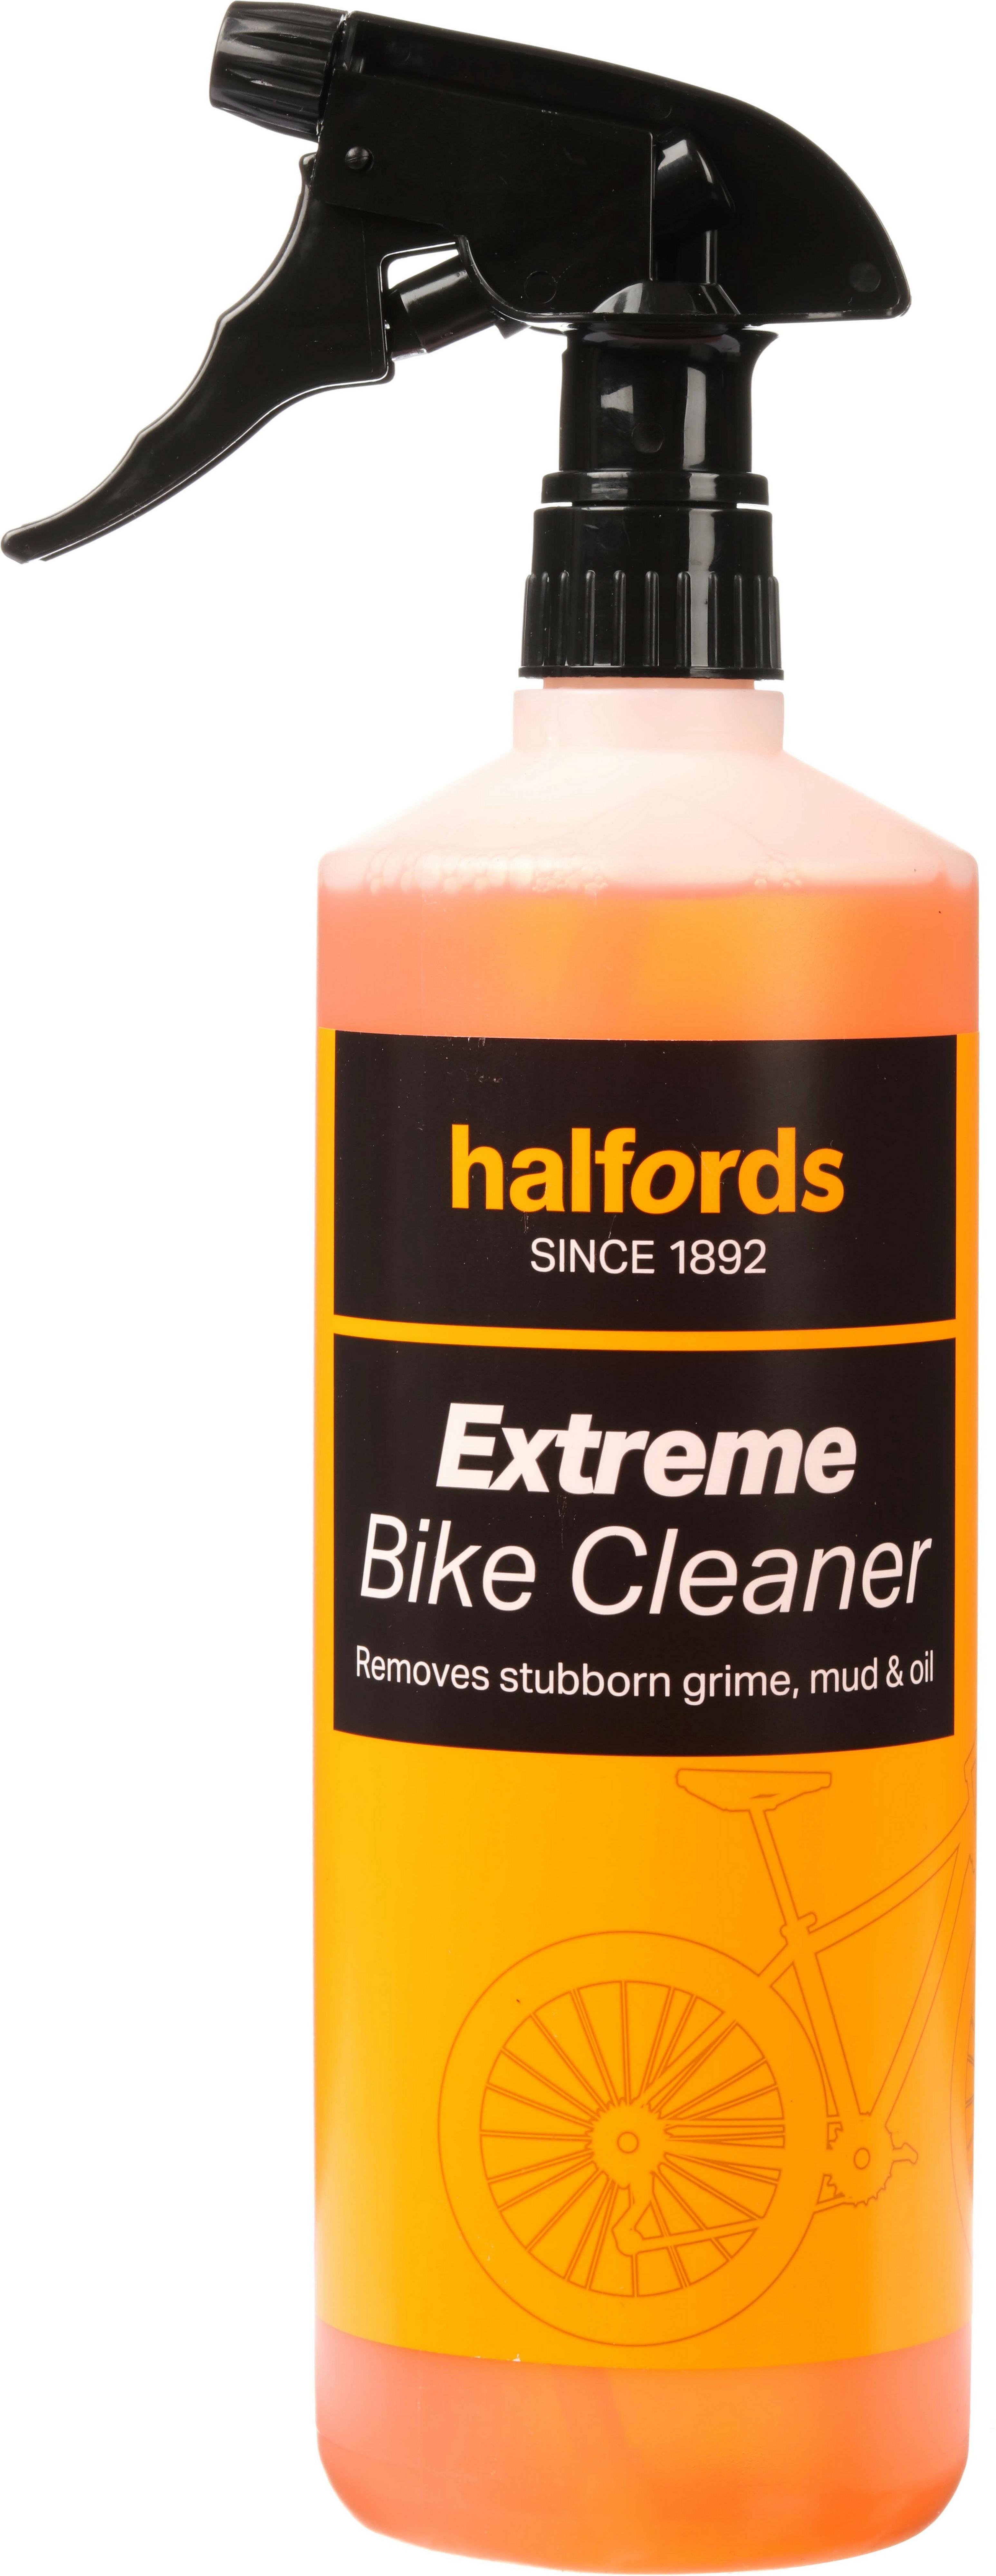 Bikehut Extreme Bike Cleaner, 1 Litre 